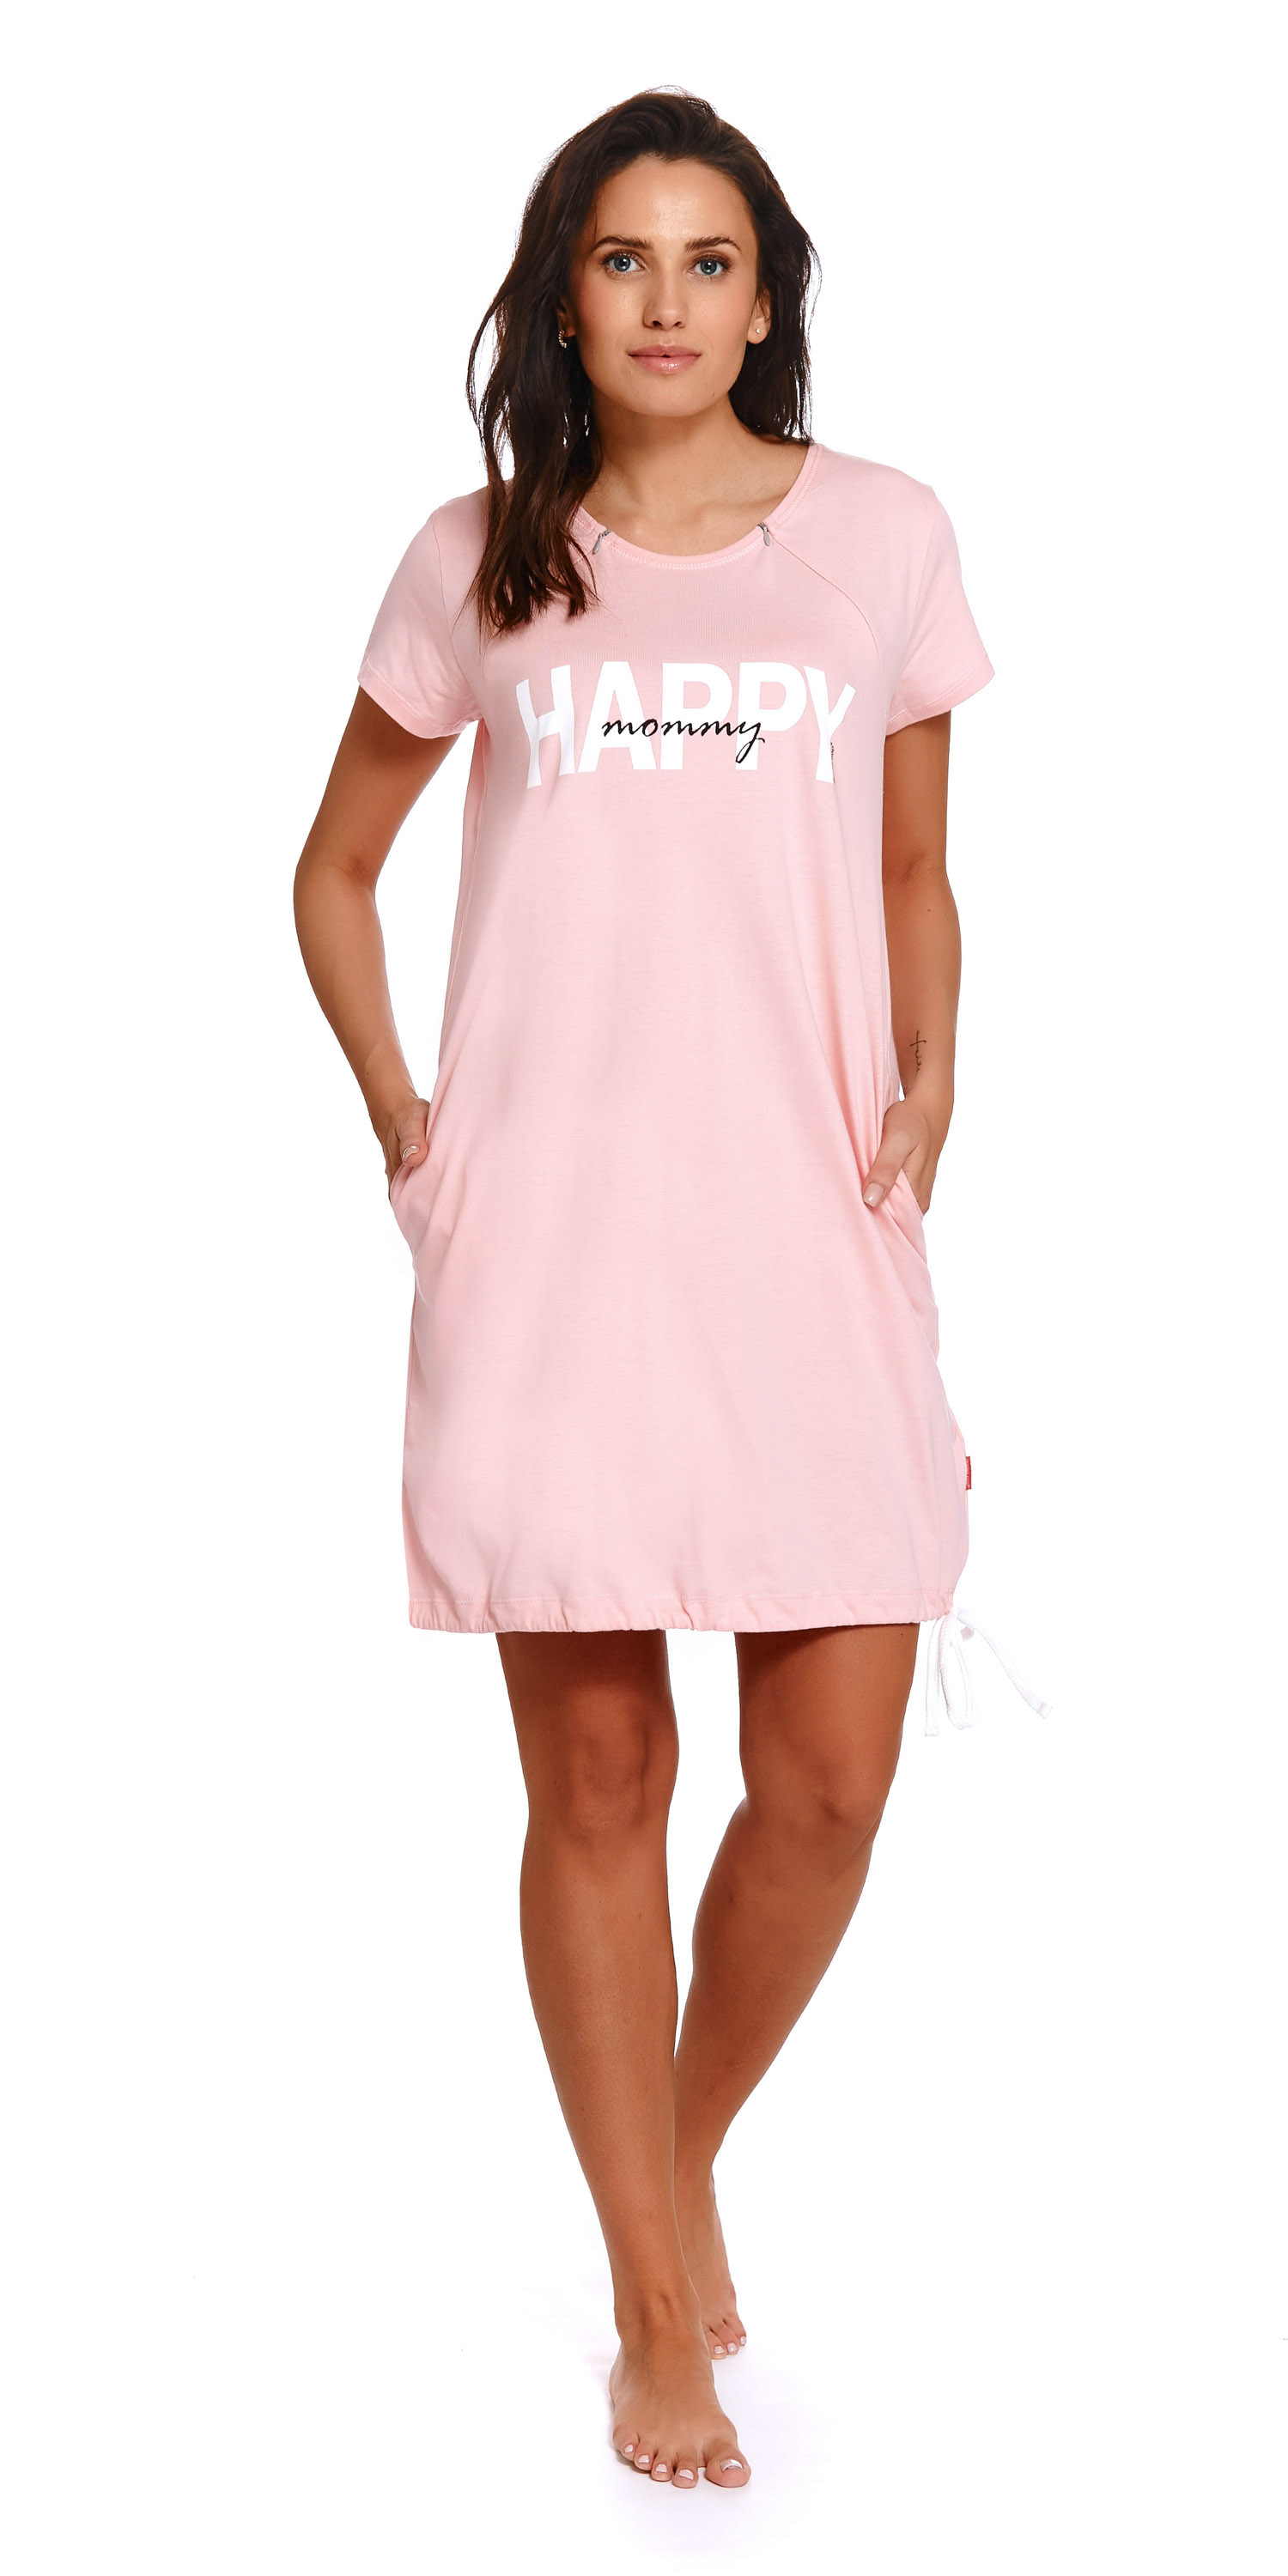 Dámska nočná košeľa Doctor nap 9504 - Happy mommy ružová